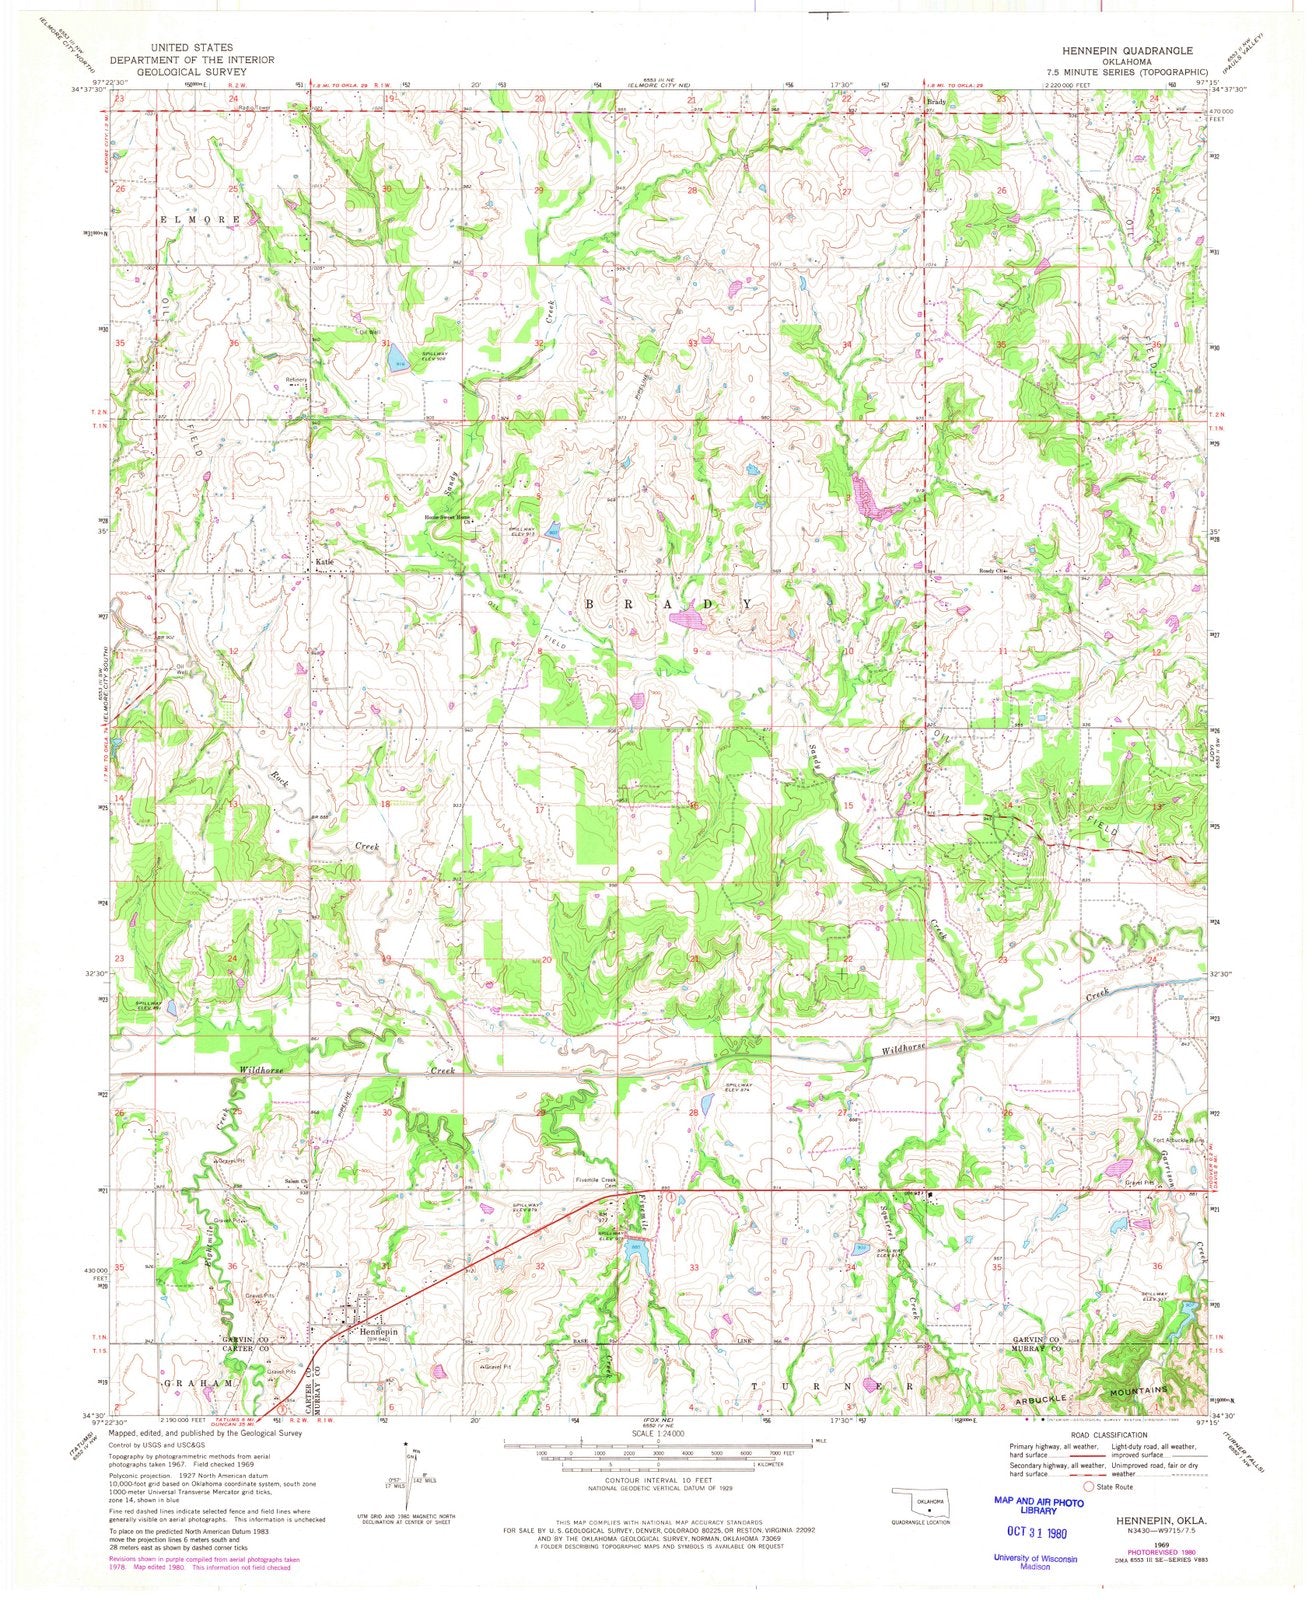 1969 Hennepin, OK - Oklahoma - USGS Topographic Map